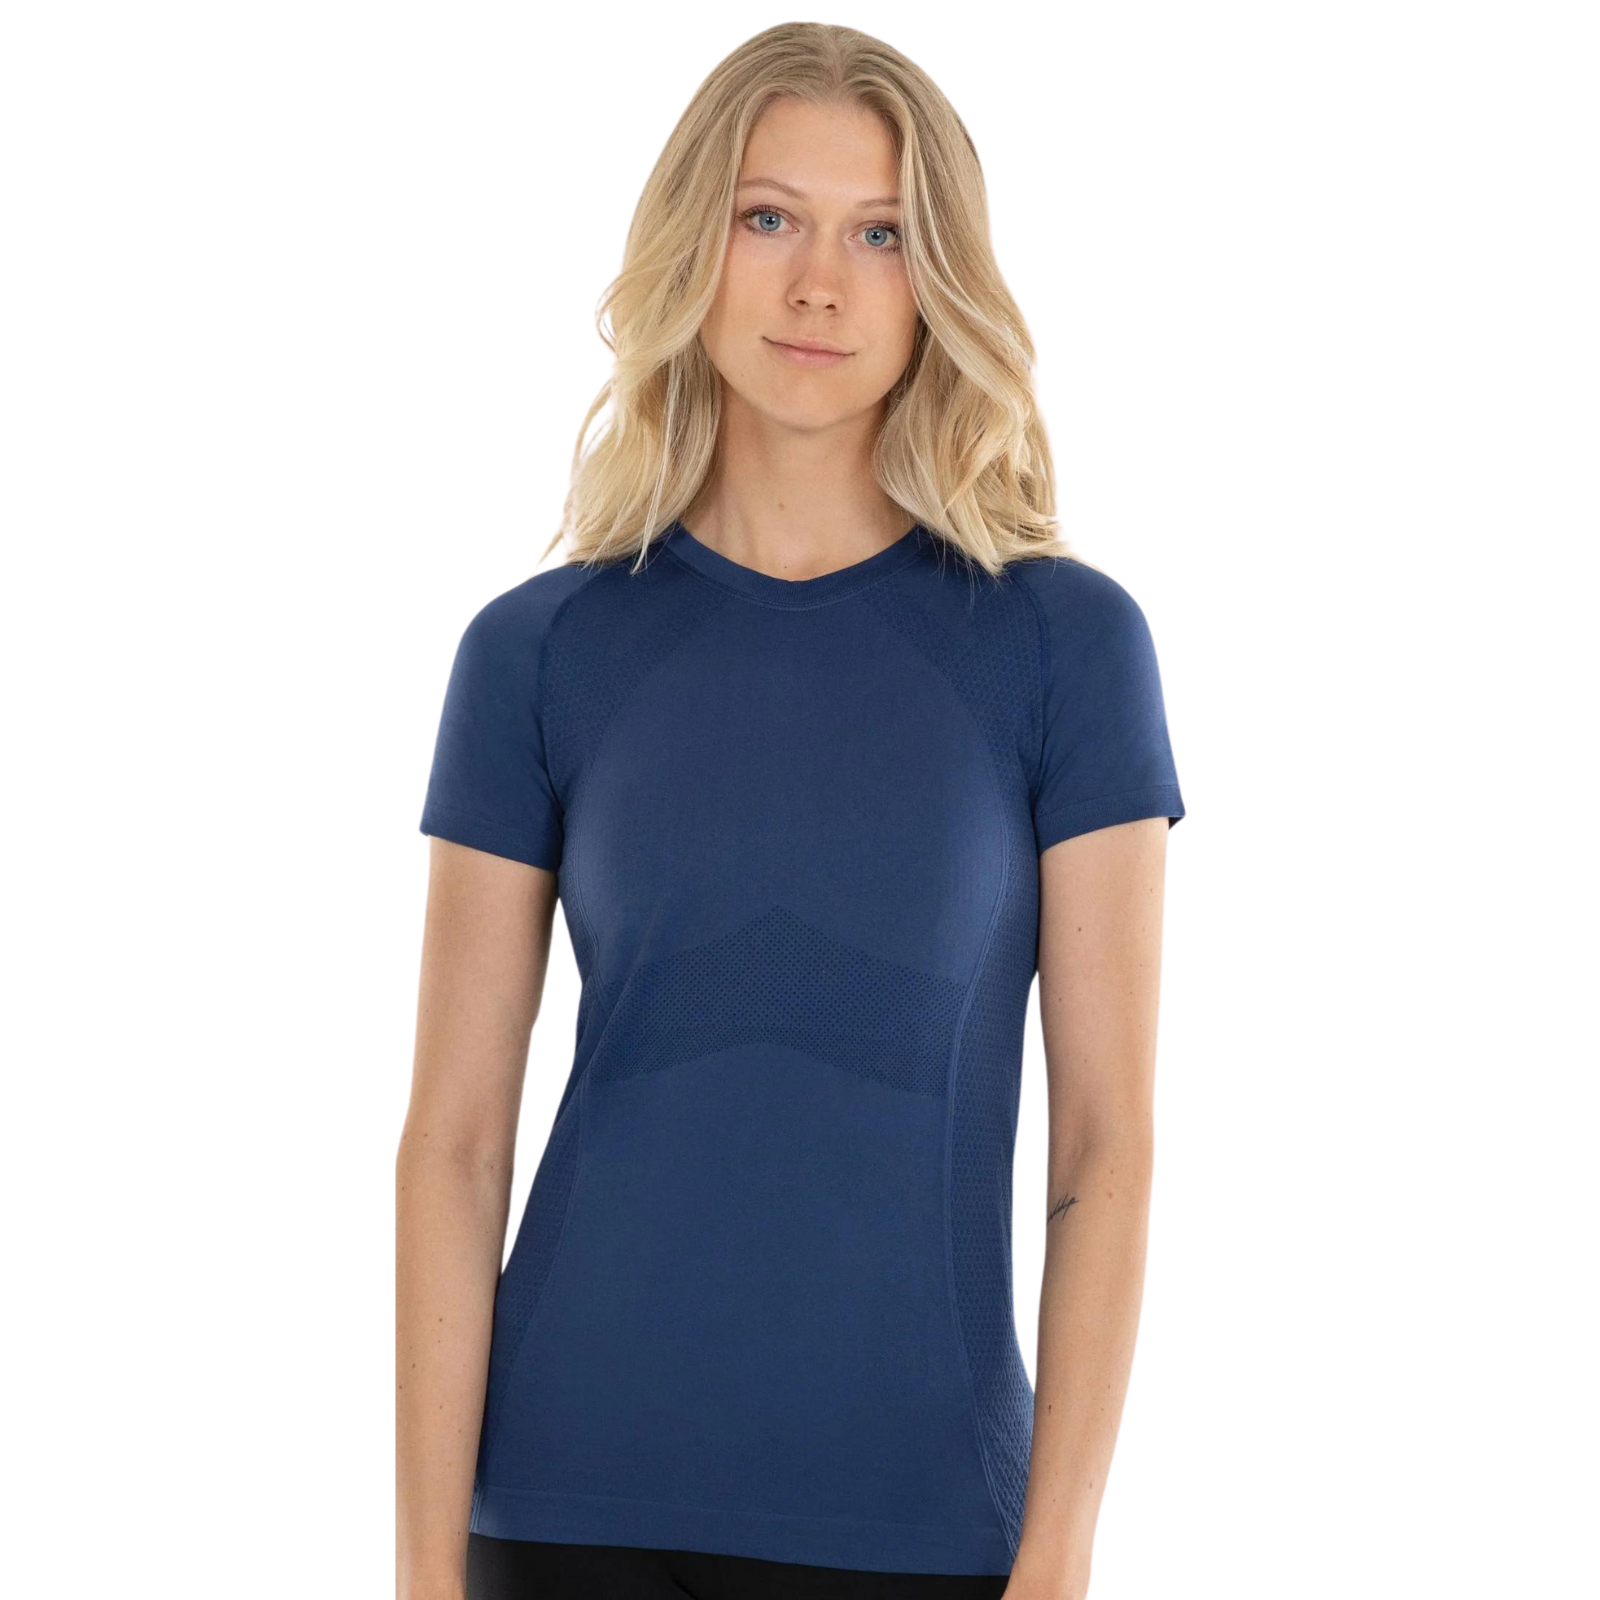 Anique Short Sleeve Crew Shirt in Blueberry - Women&#39;s XL (12)